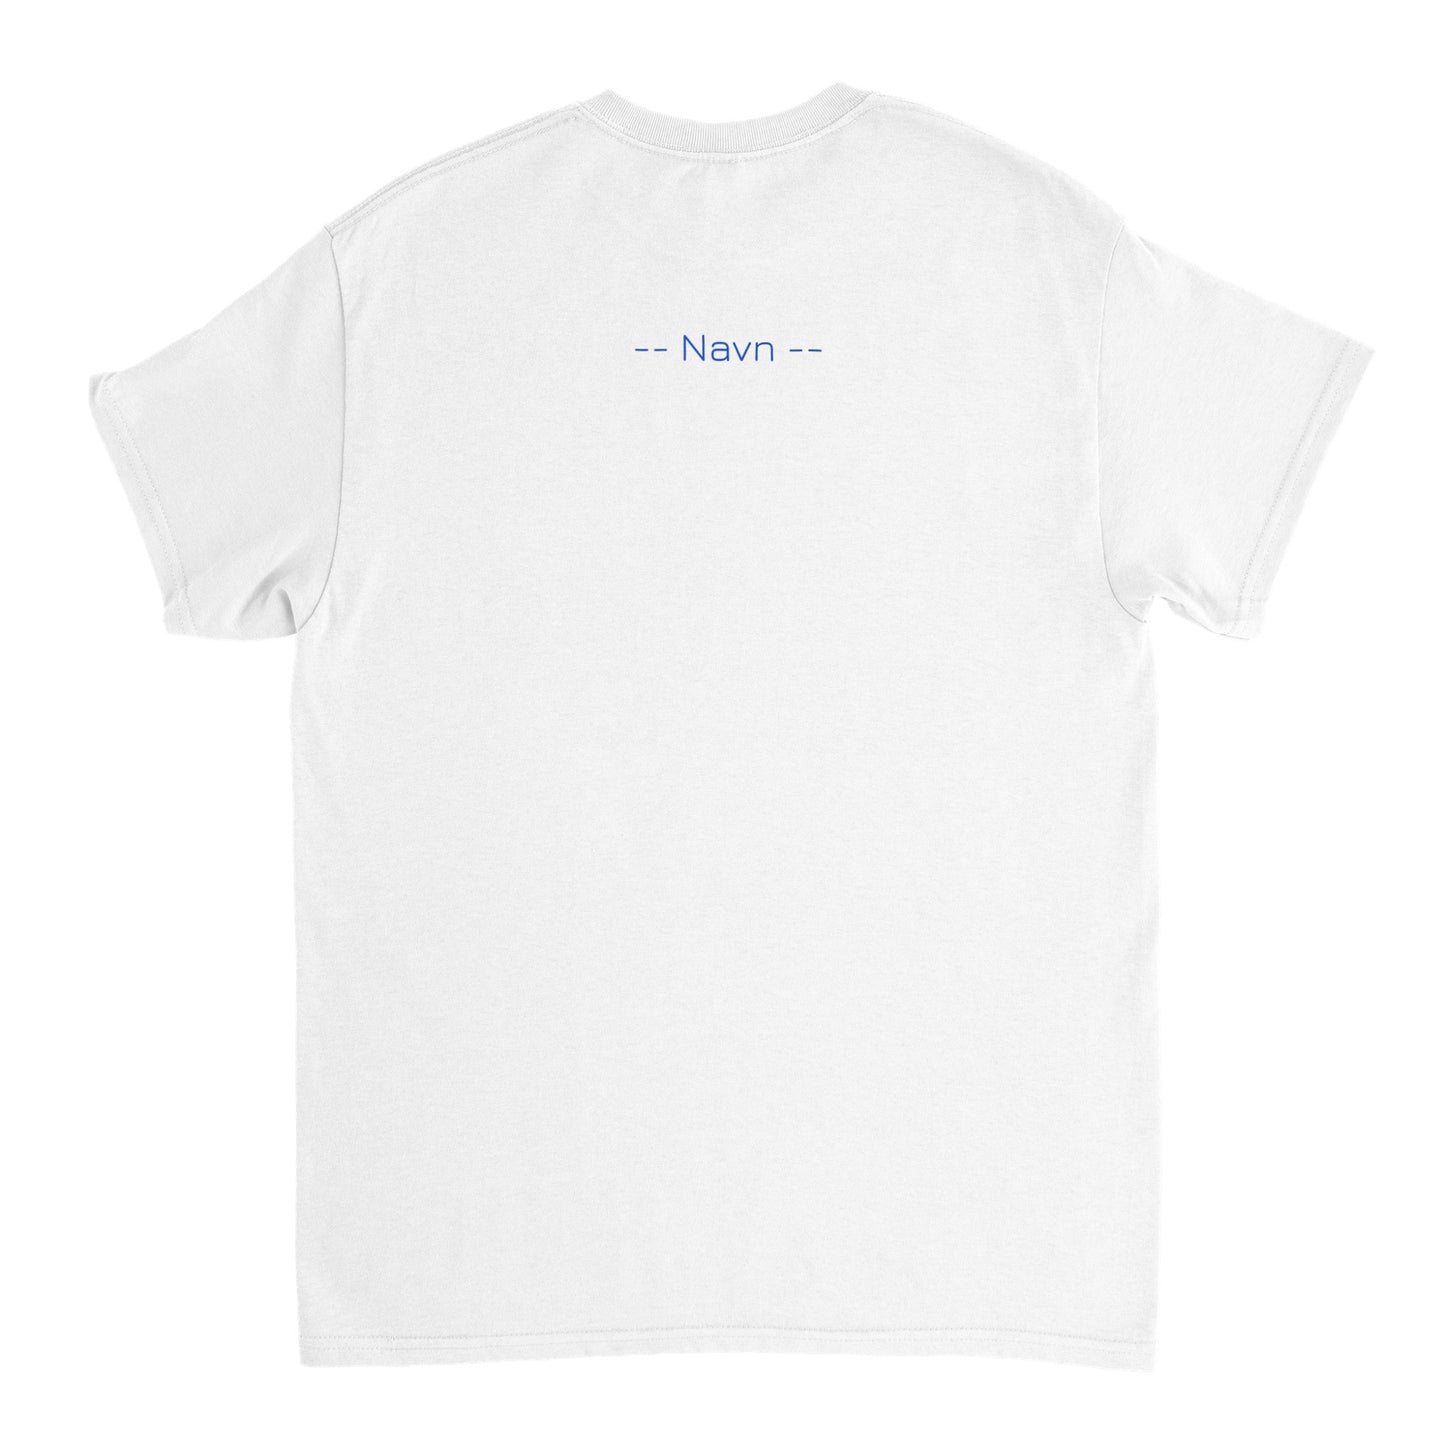 Student 2023 T-shirt - Blå Tekst